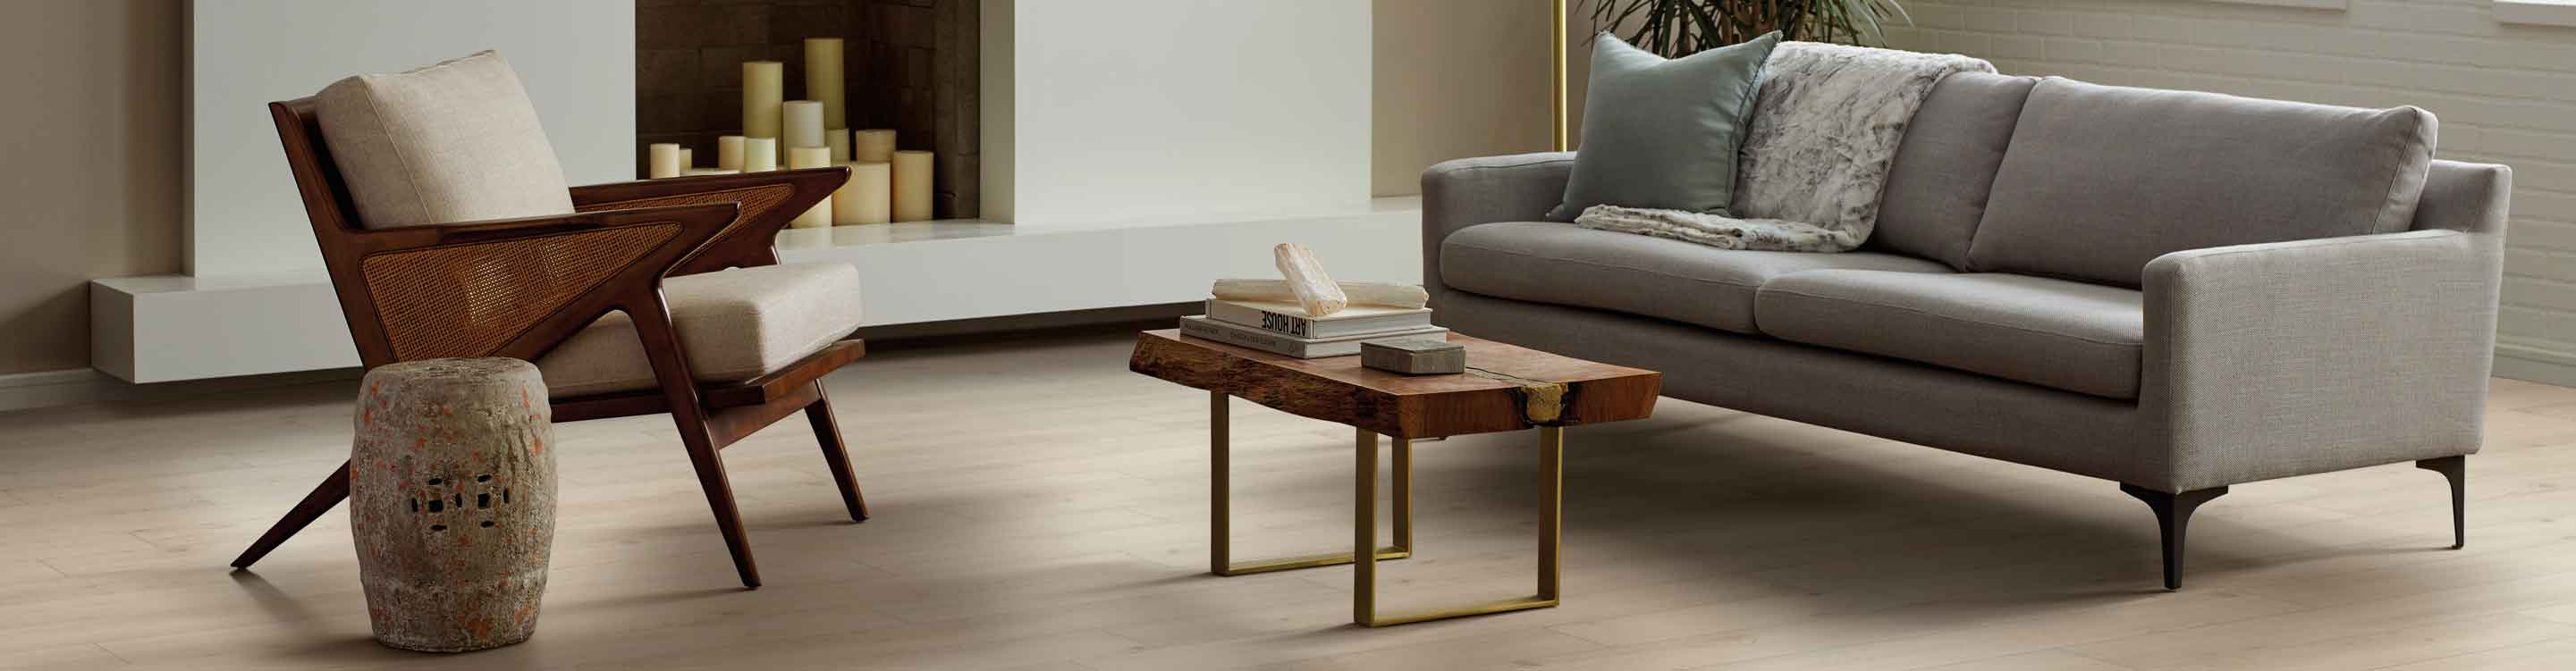 vinyl floors in a minimalist living room